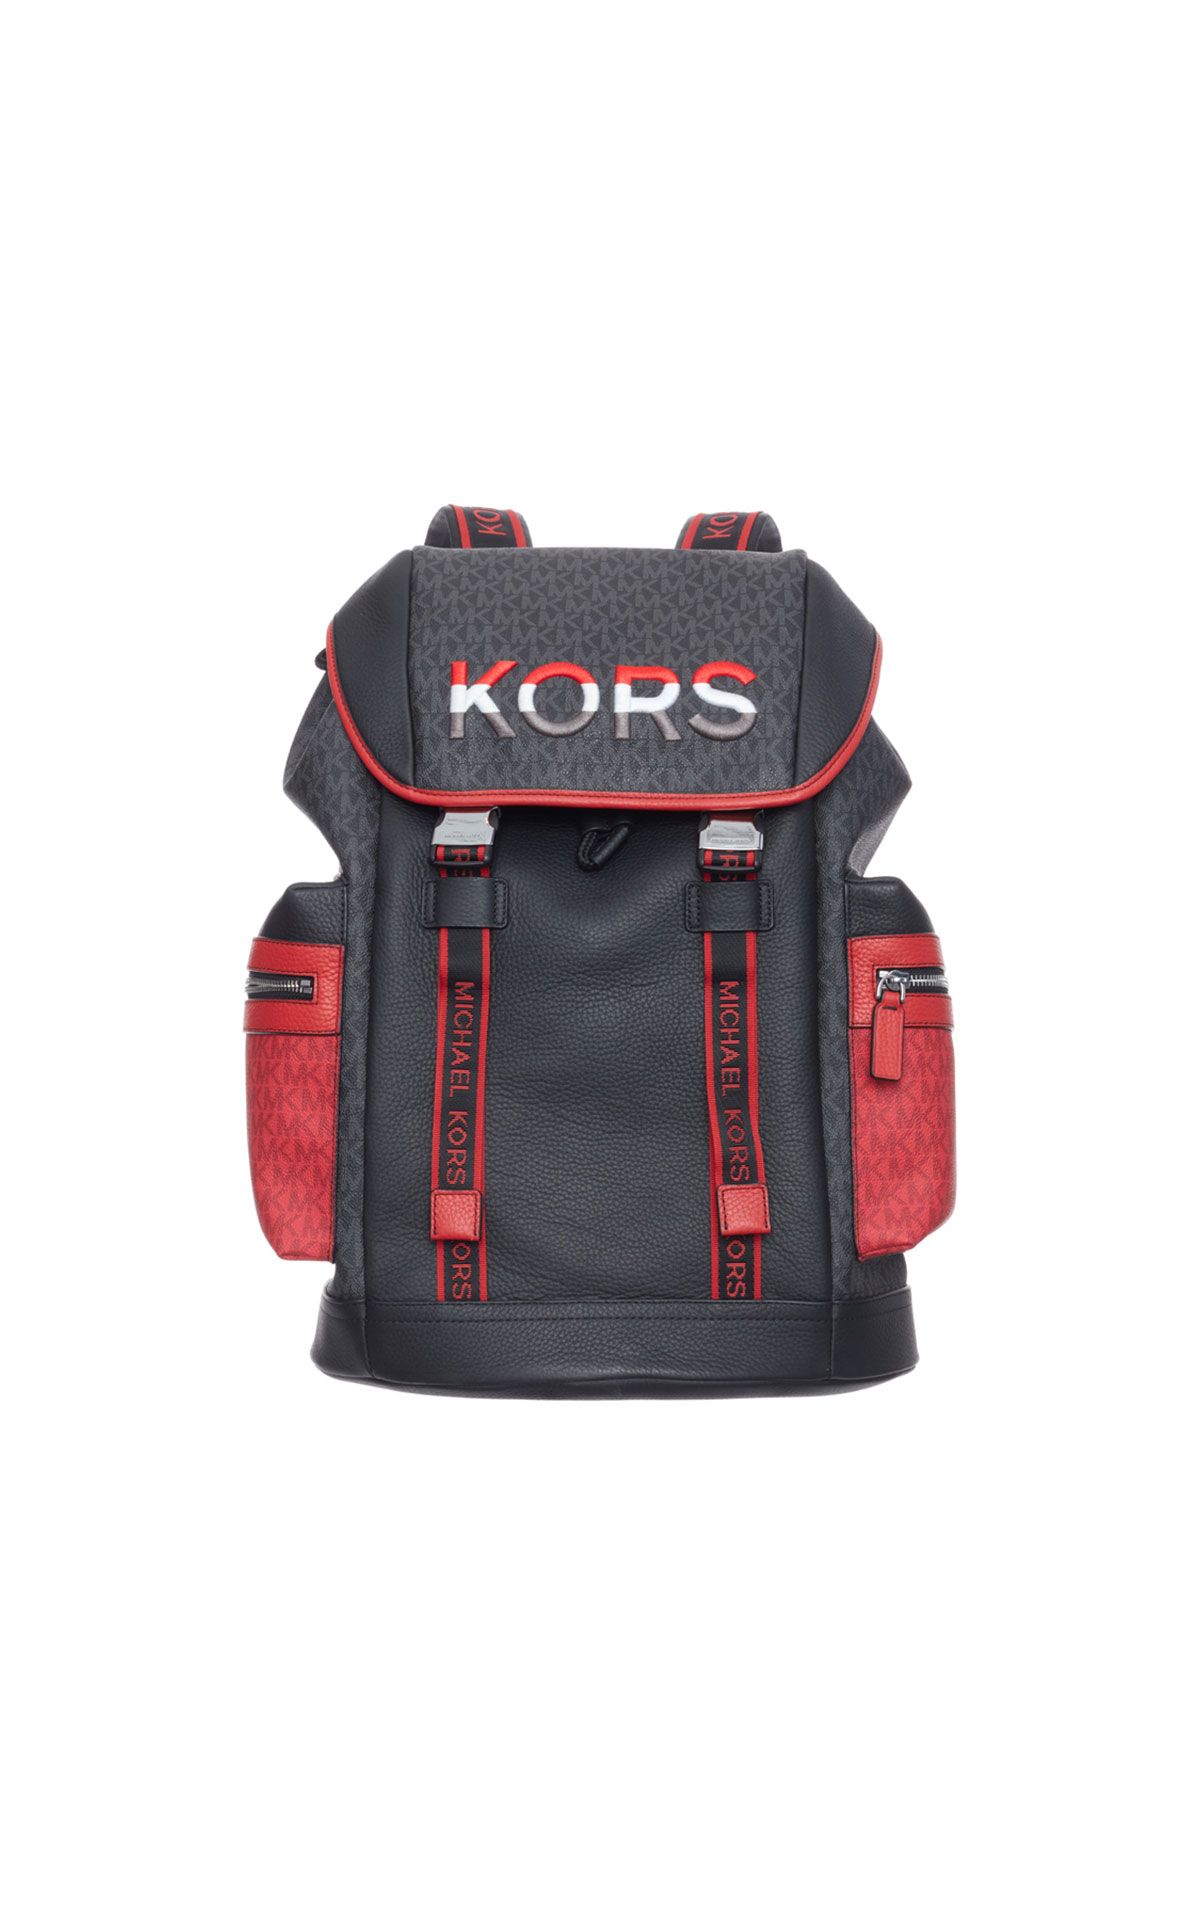 Michael Kors Cooper backpack from Bicester Village